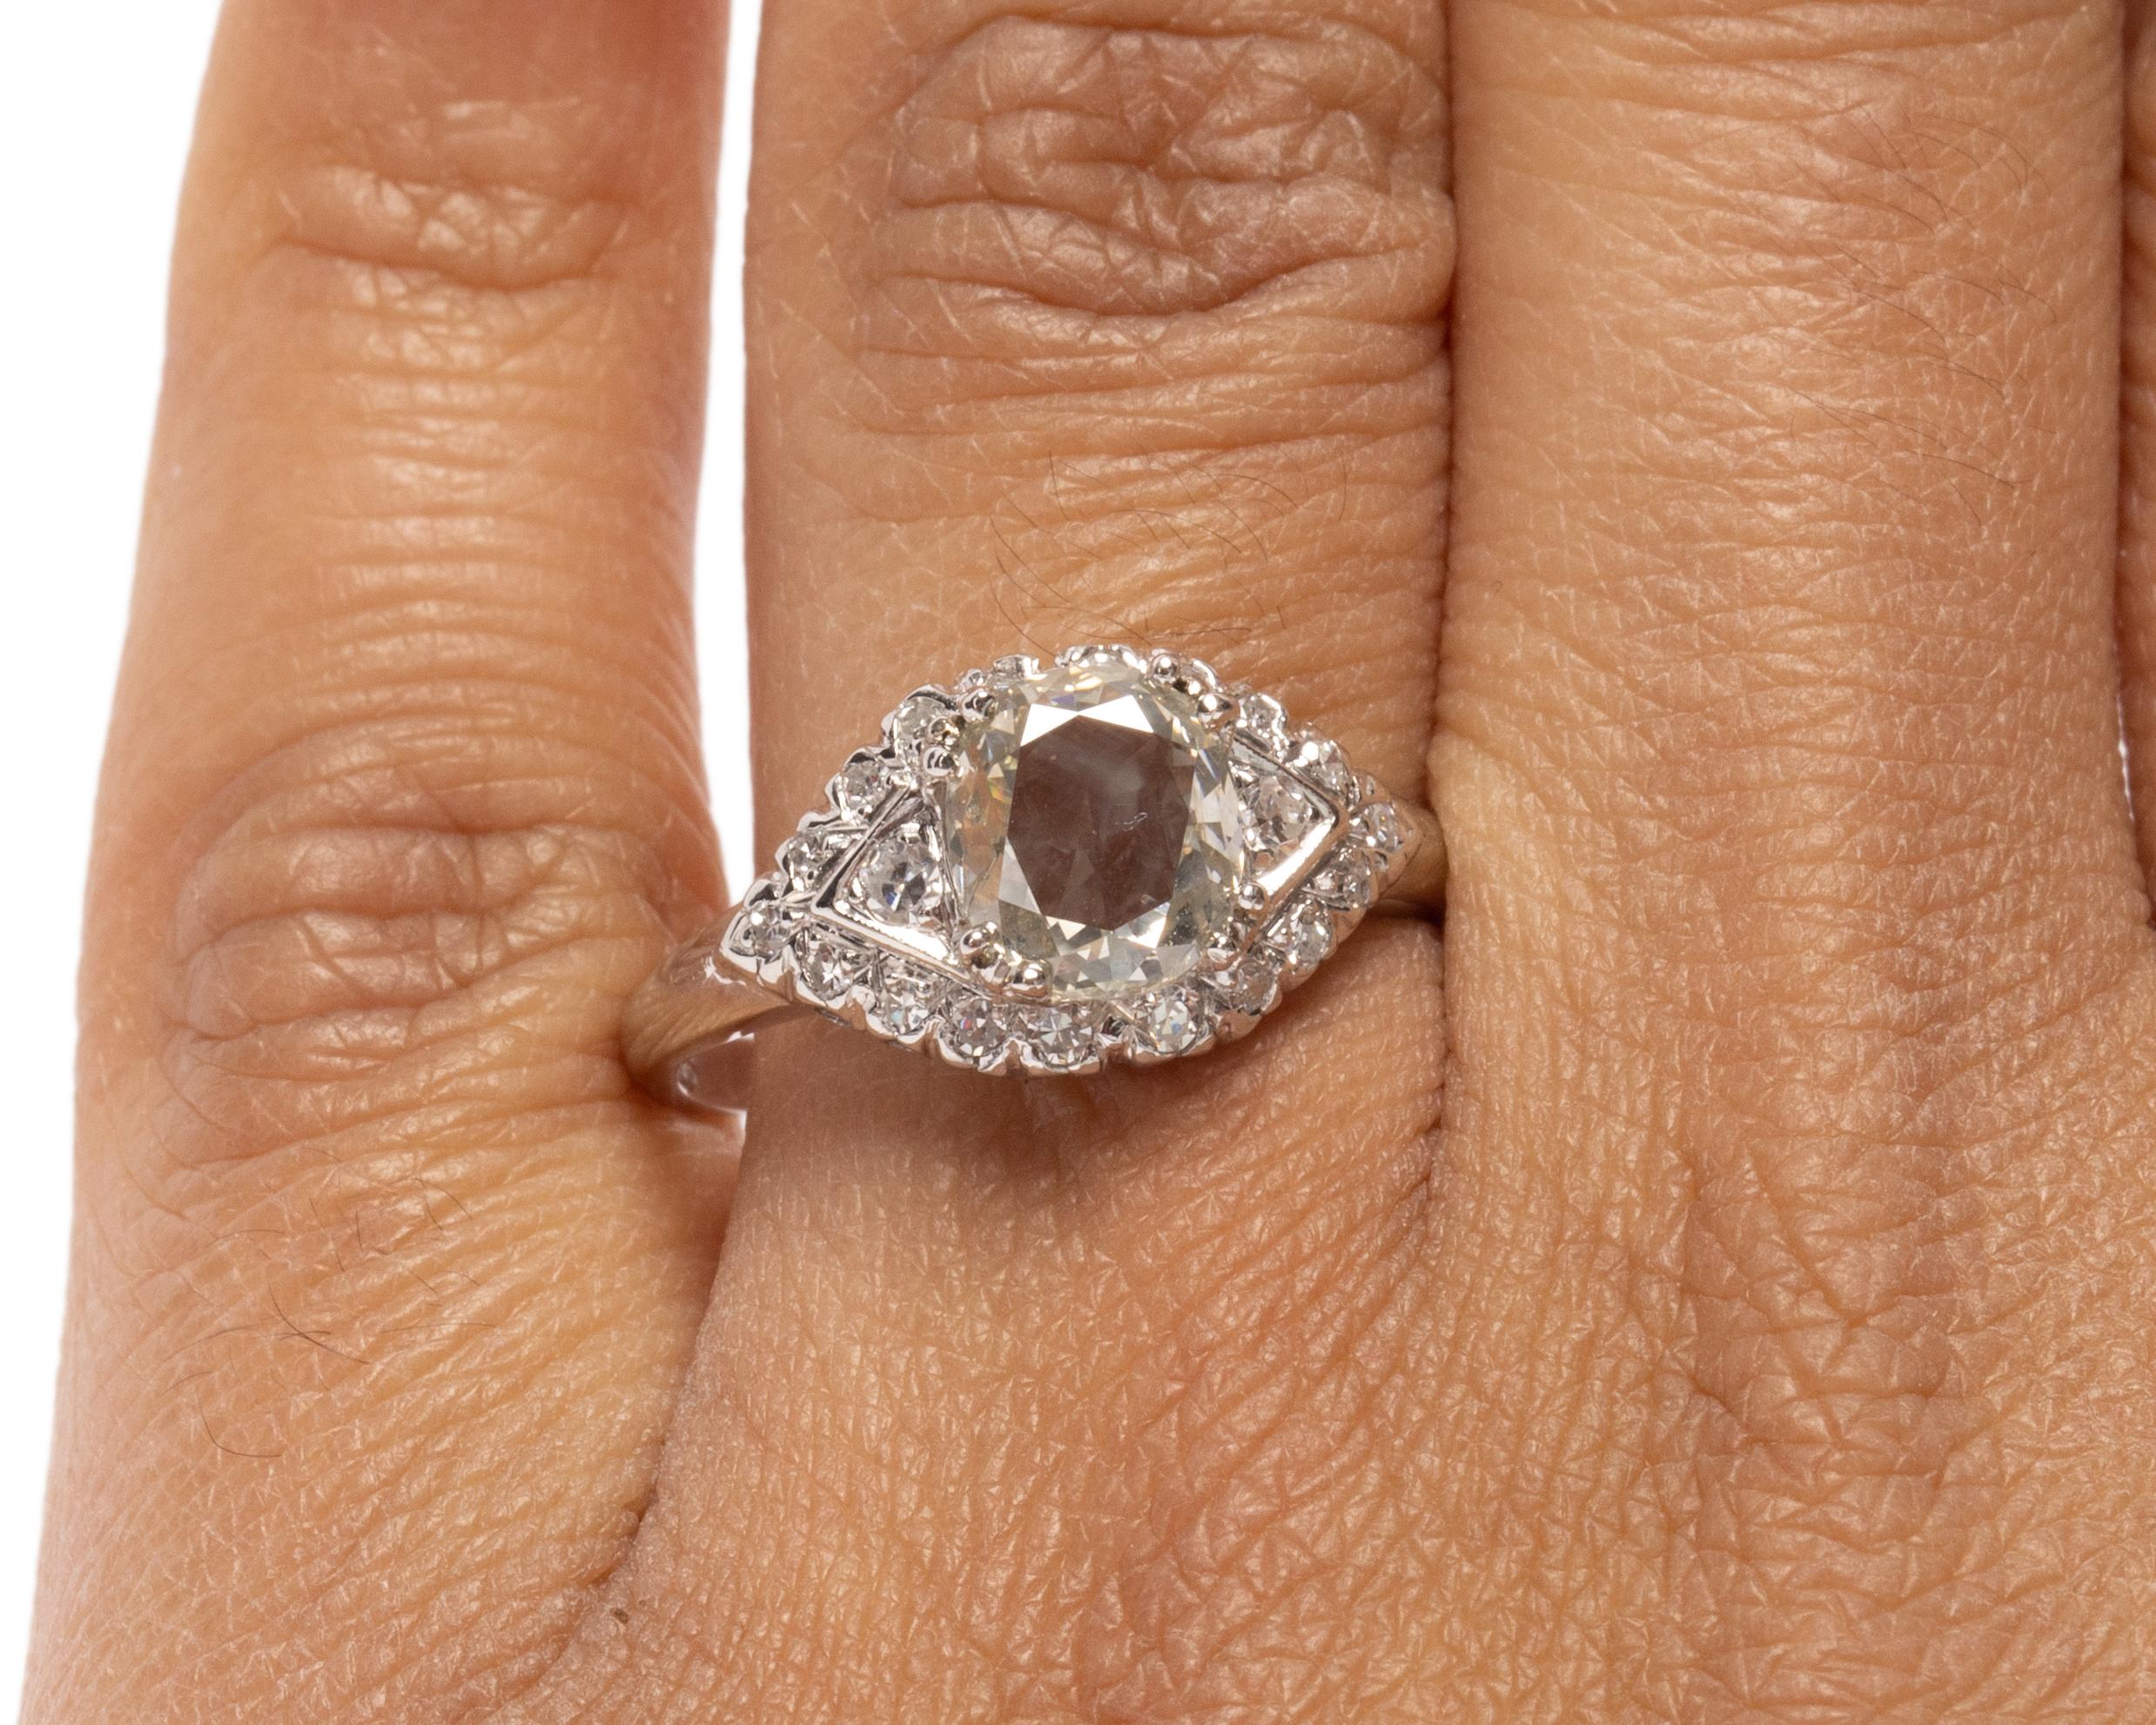 Vintage Art Deco Platinum Rose Cut Diamond Engagement Ring with Diamond Accents 1